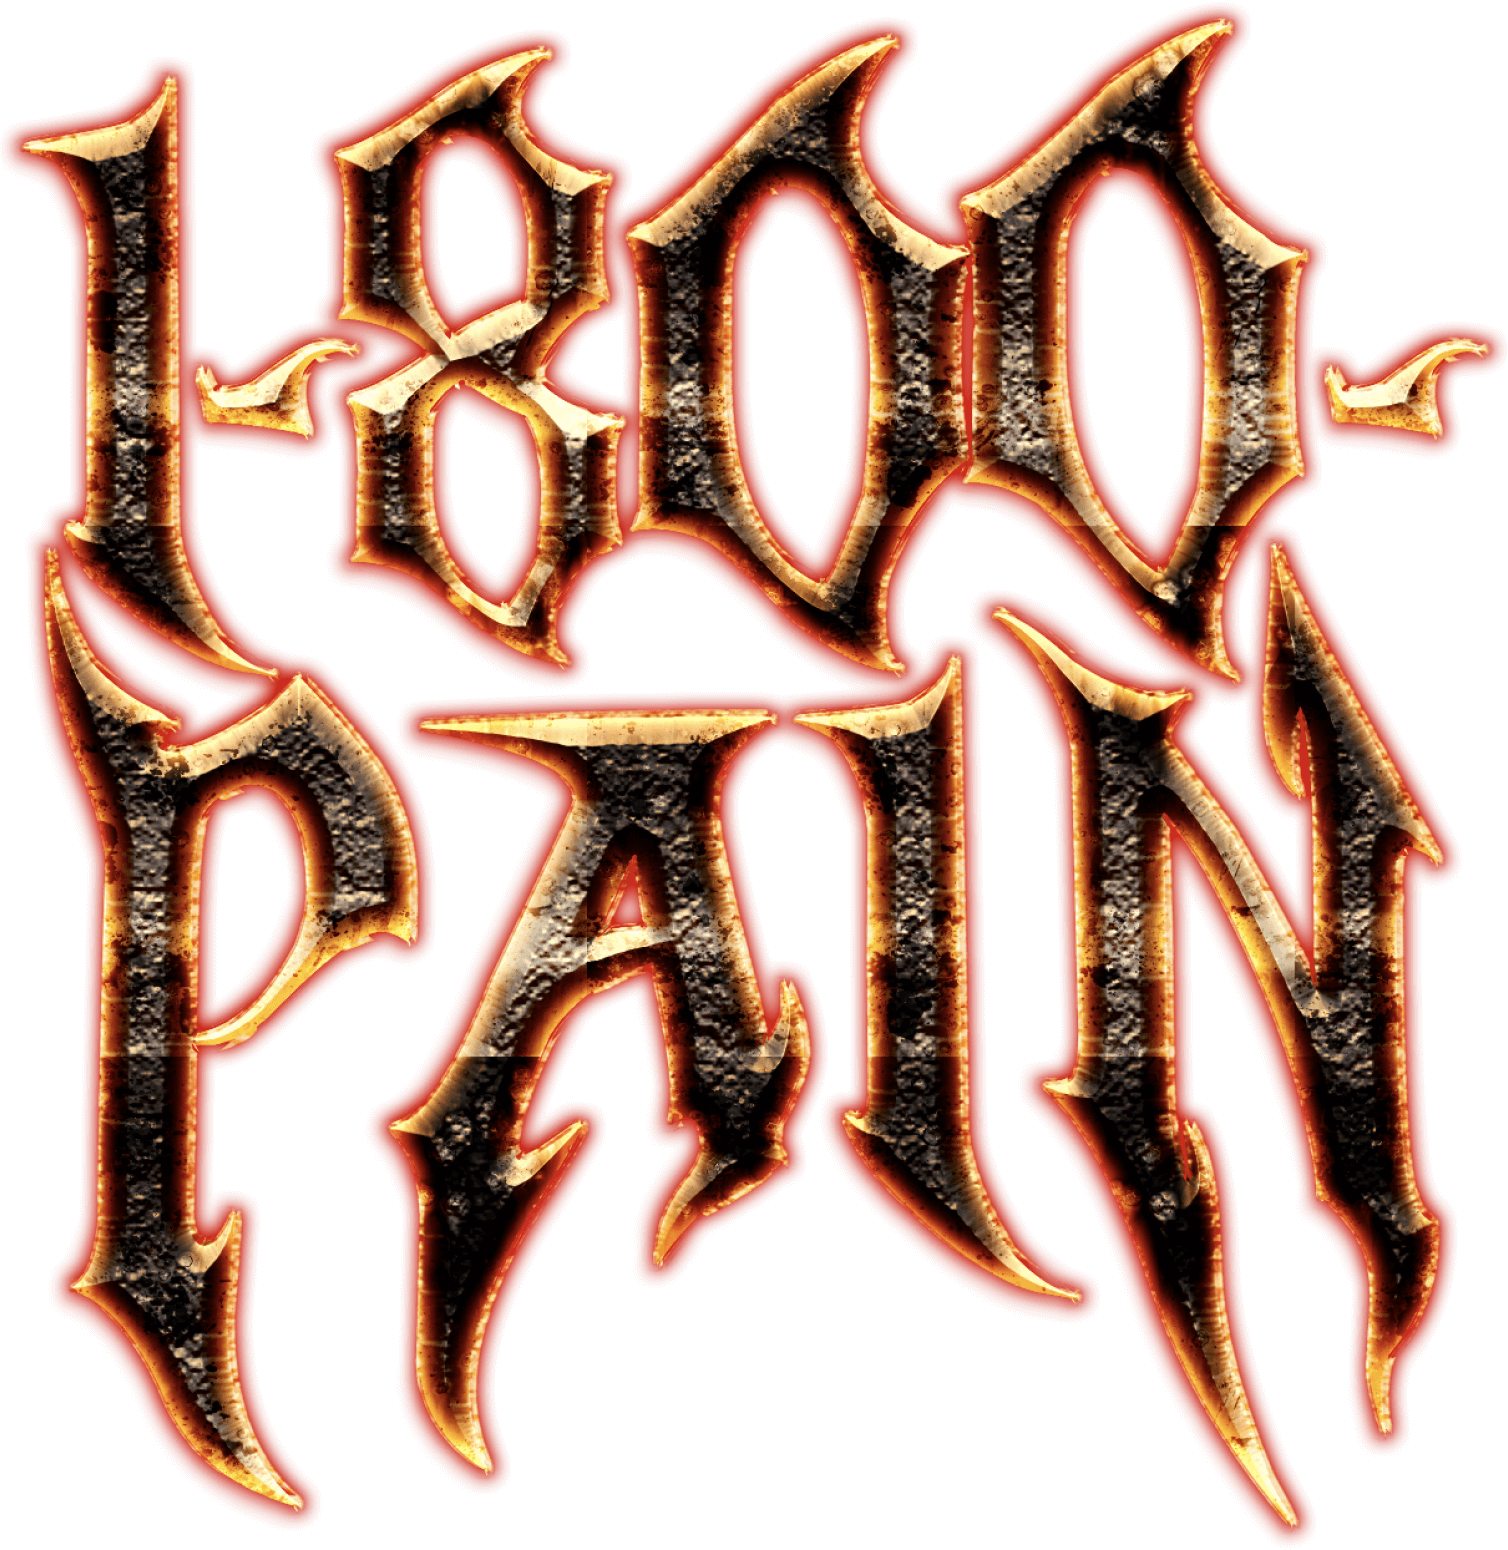 1800 pain tour